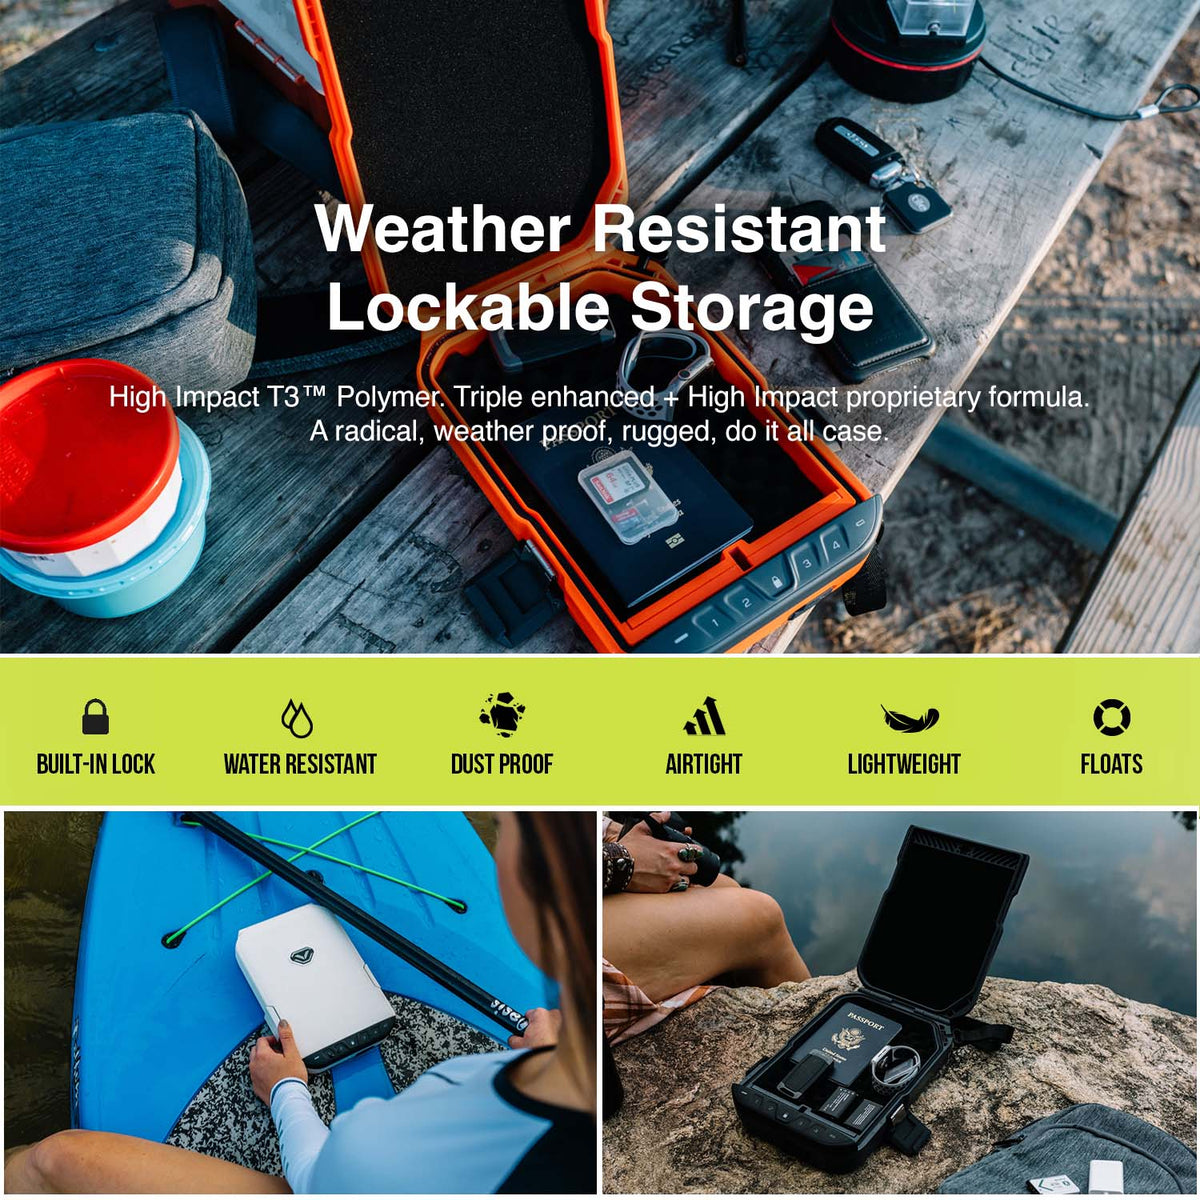 Vaultek - LifePod Rugged Airtight Weather Resistant